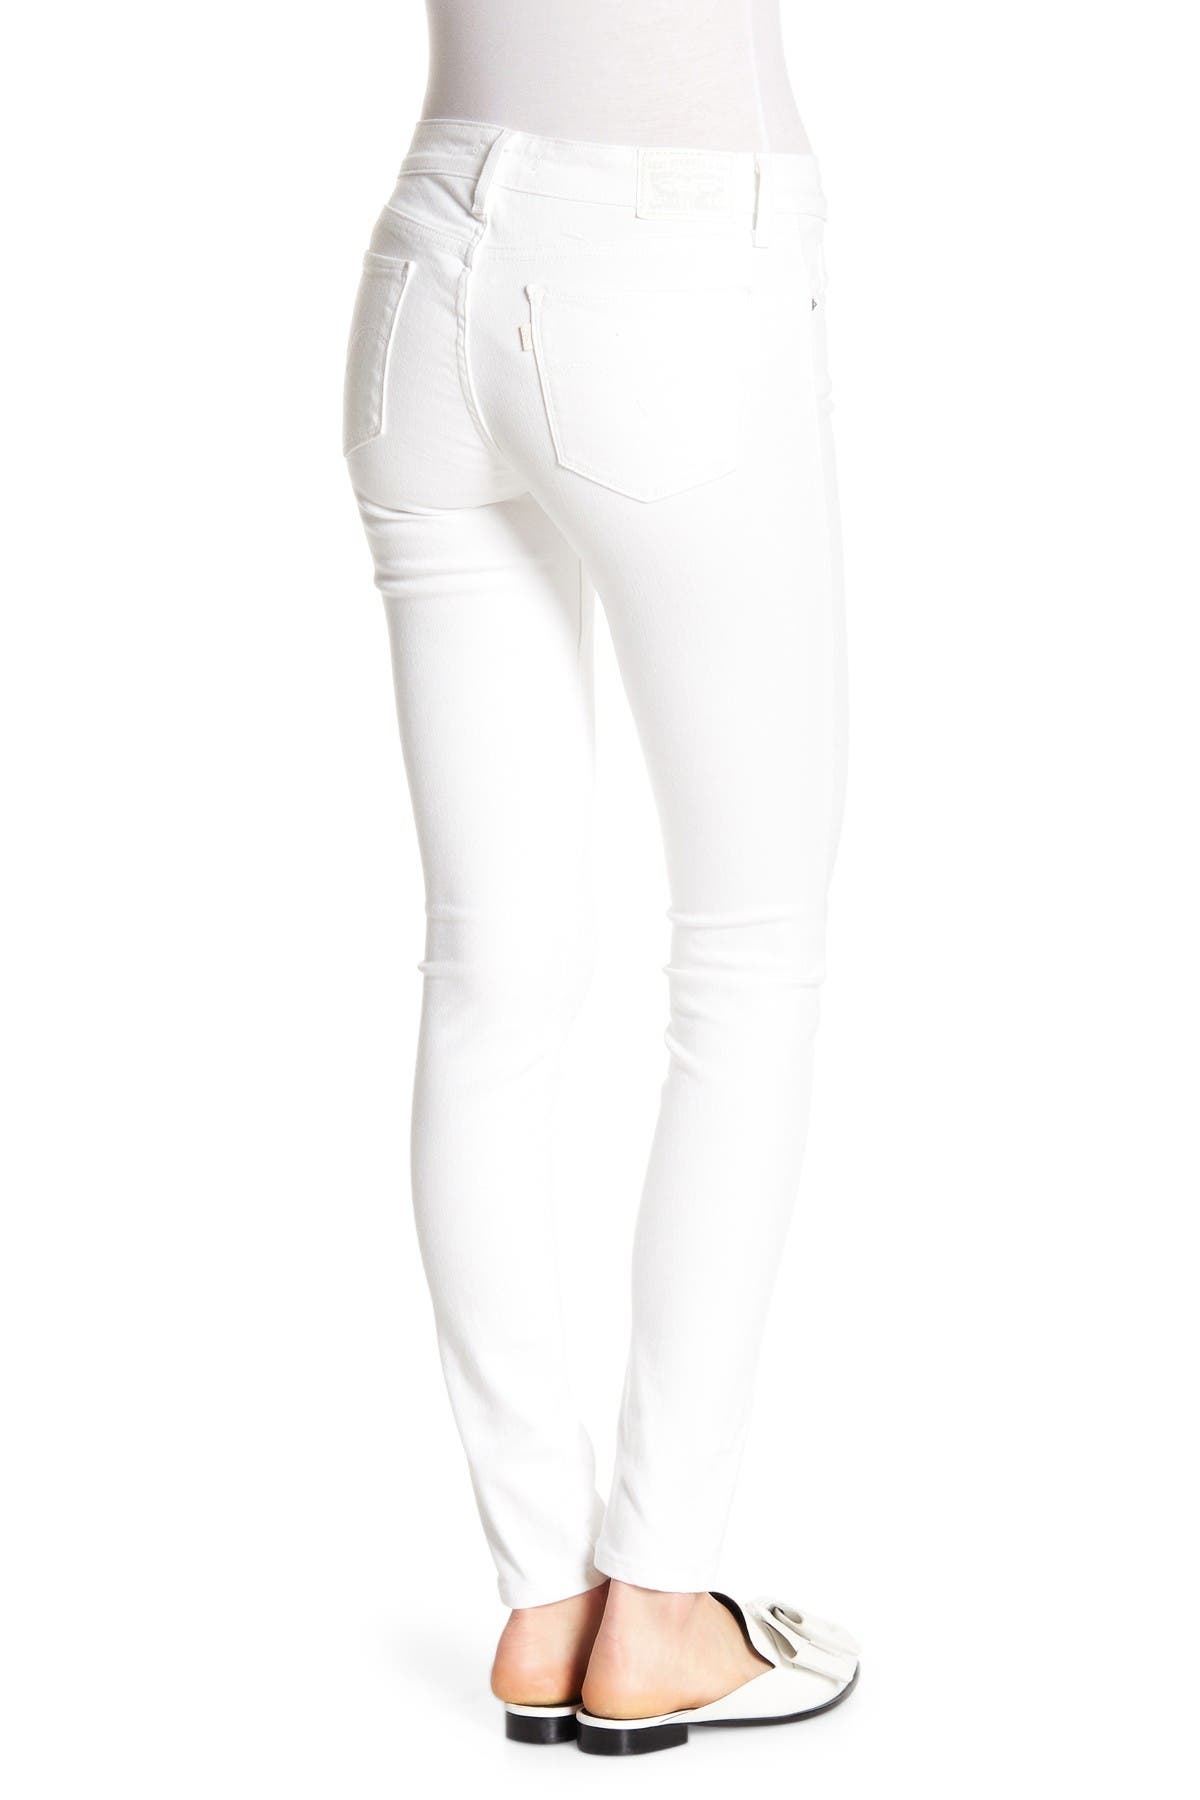 levi's 711 white jeans